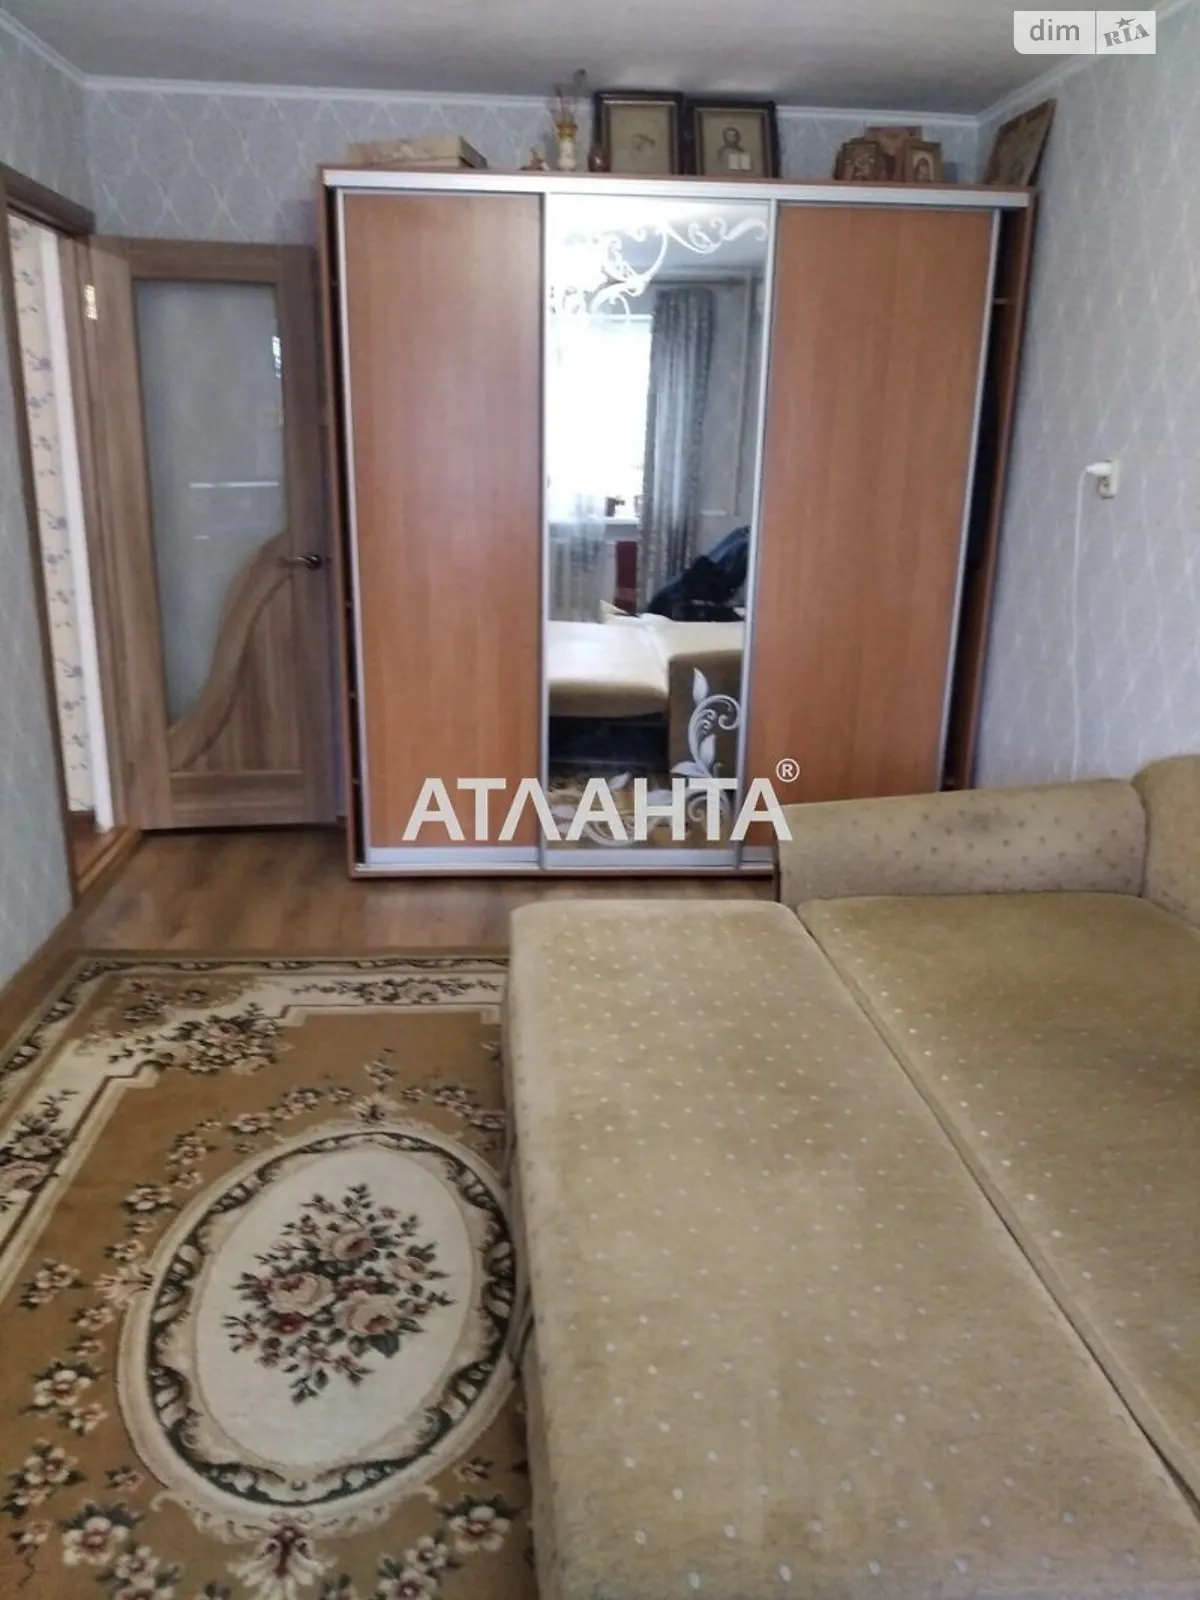 Продается комната 35 кв. м в Одессе, цена: 15000 $ - фото 1